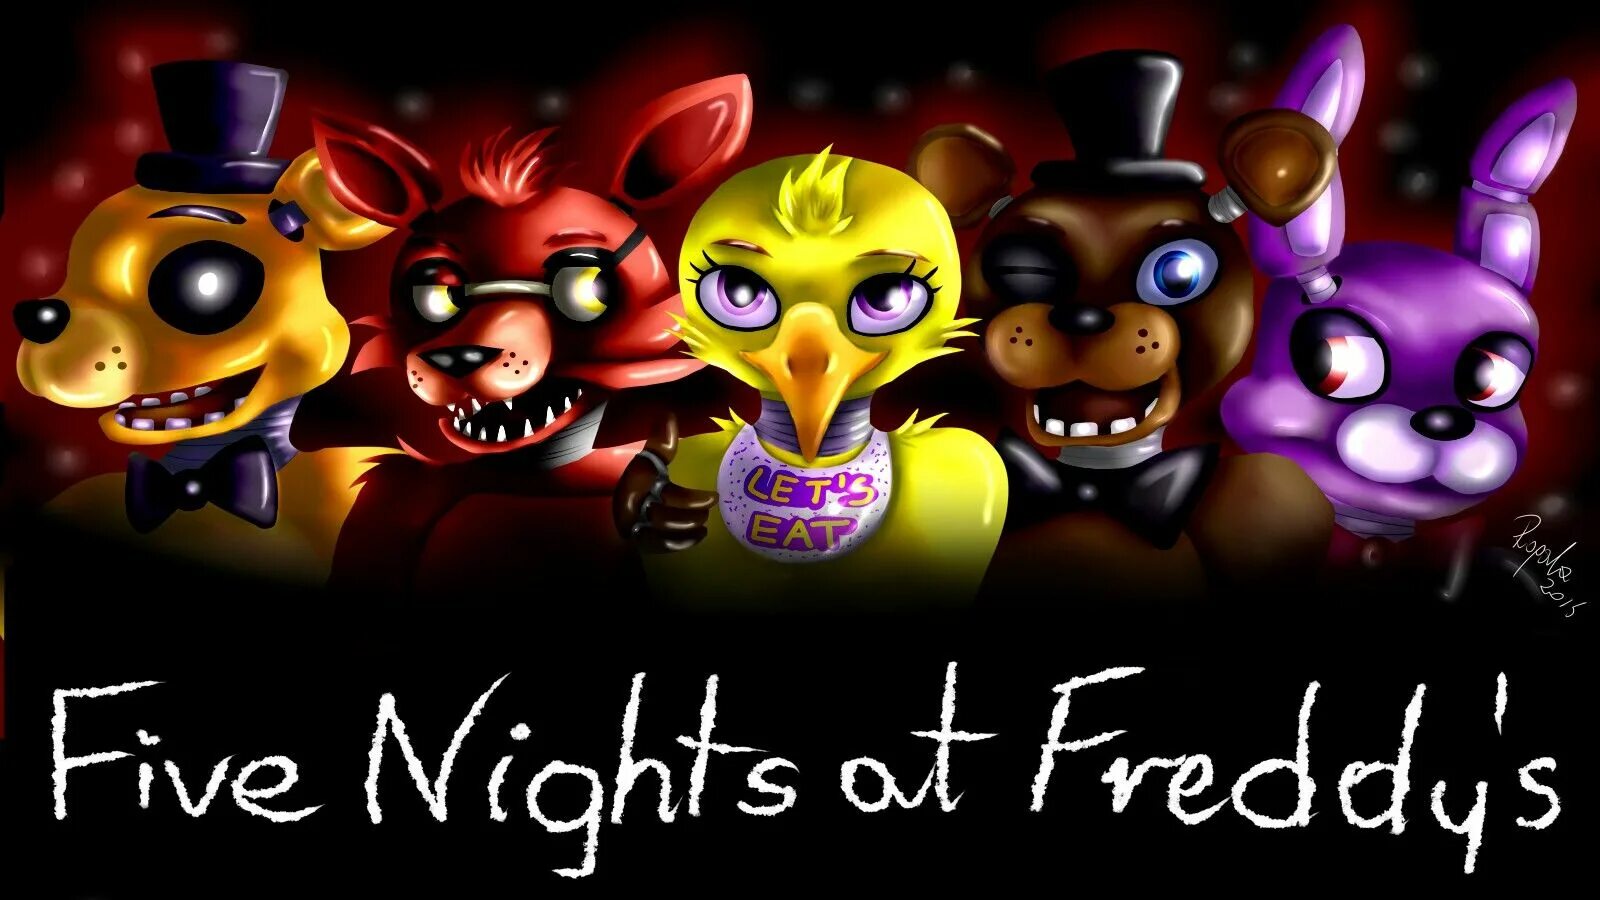 Фиве Нигхт АТ Фредди. ФНАФ 1. Файф Найт Фредди. Five Nights at Freddy's Фредди. Фнаф 1 на английском